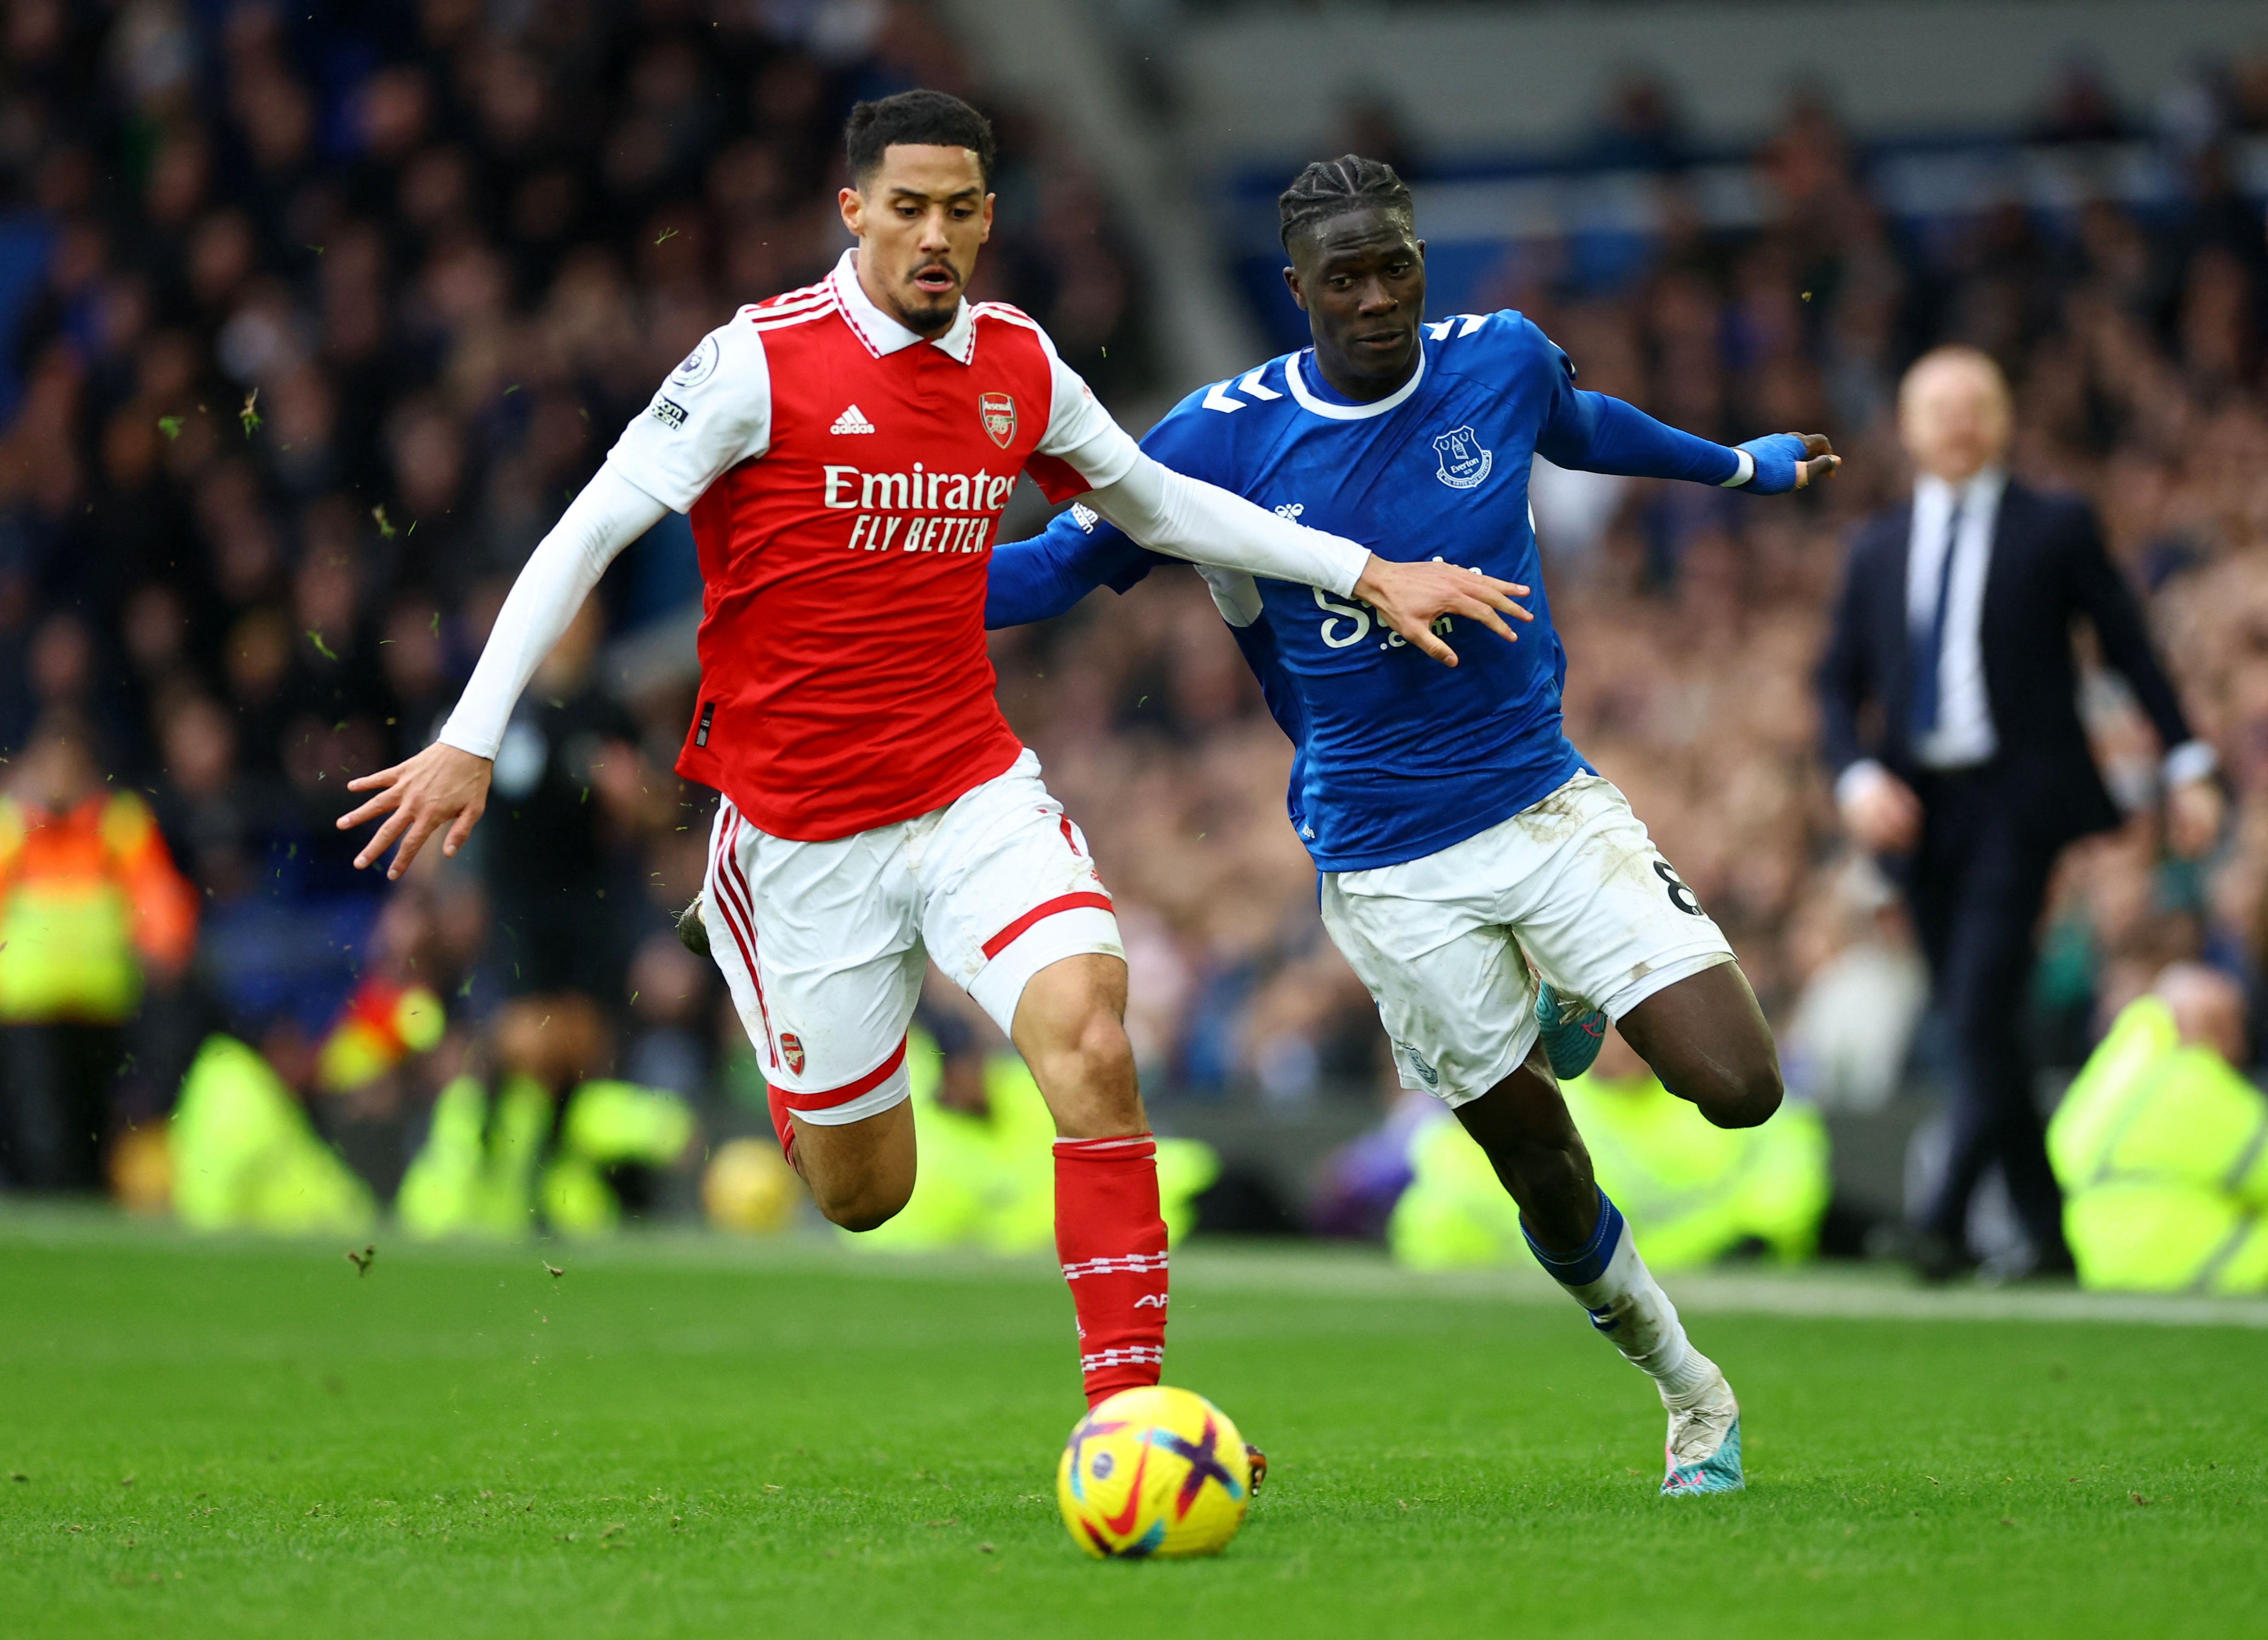 Arsenal's William Saliba in action with Everton's Amadou Onana